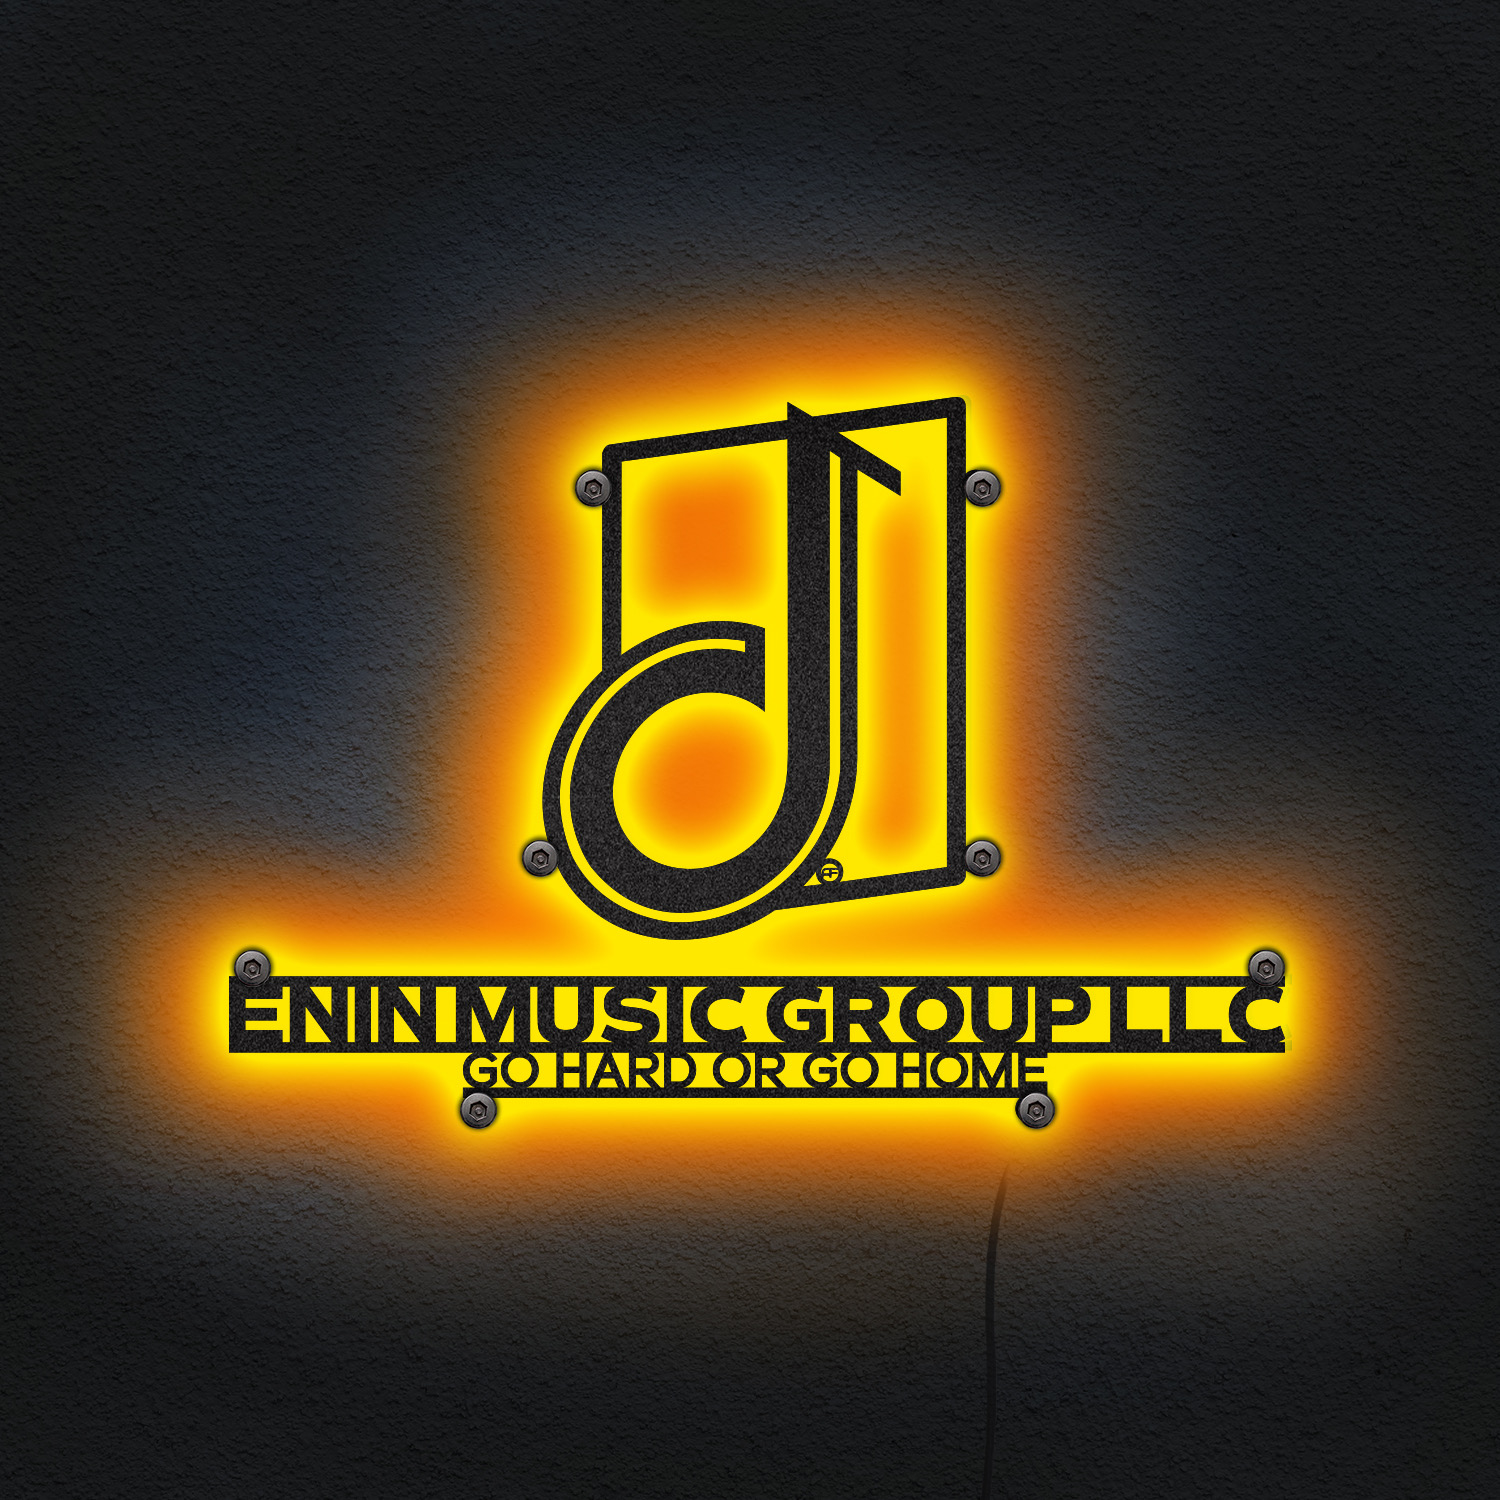 Enin Music Group llc